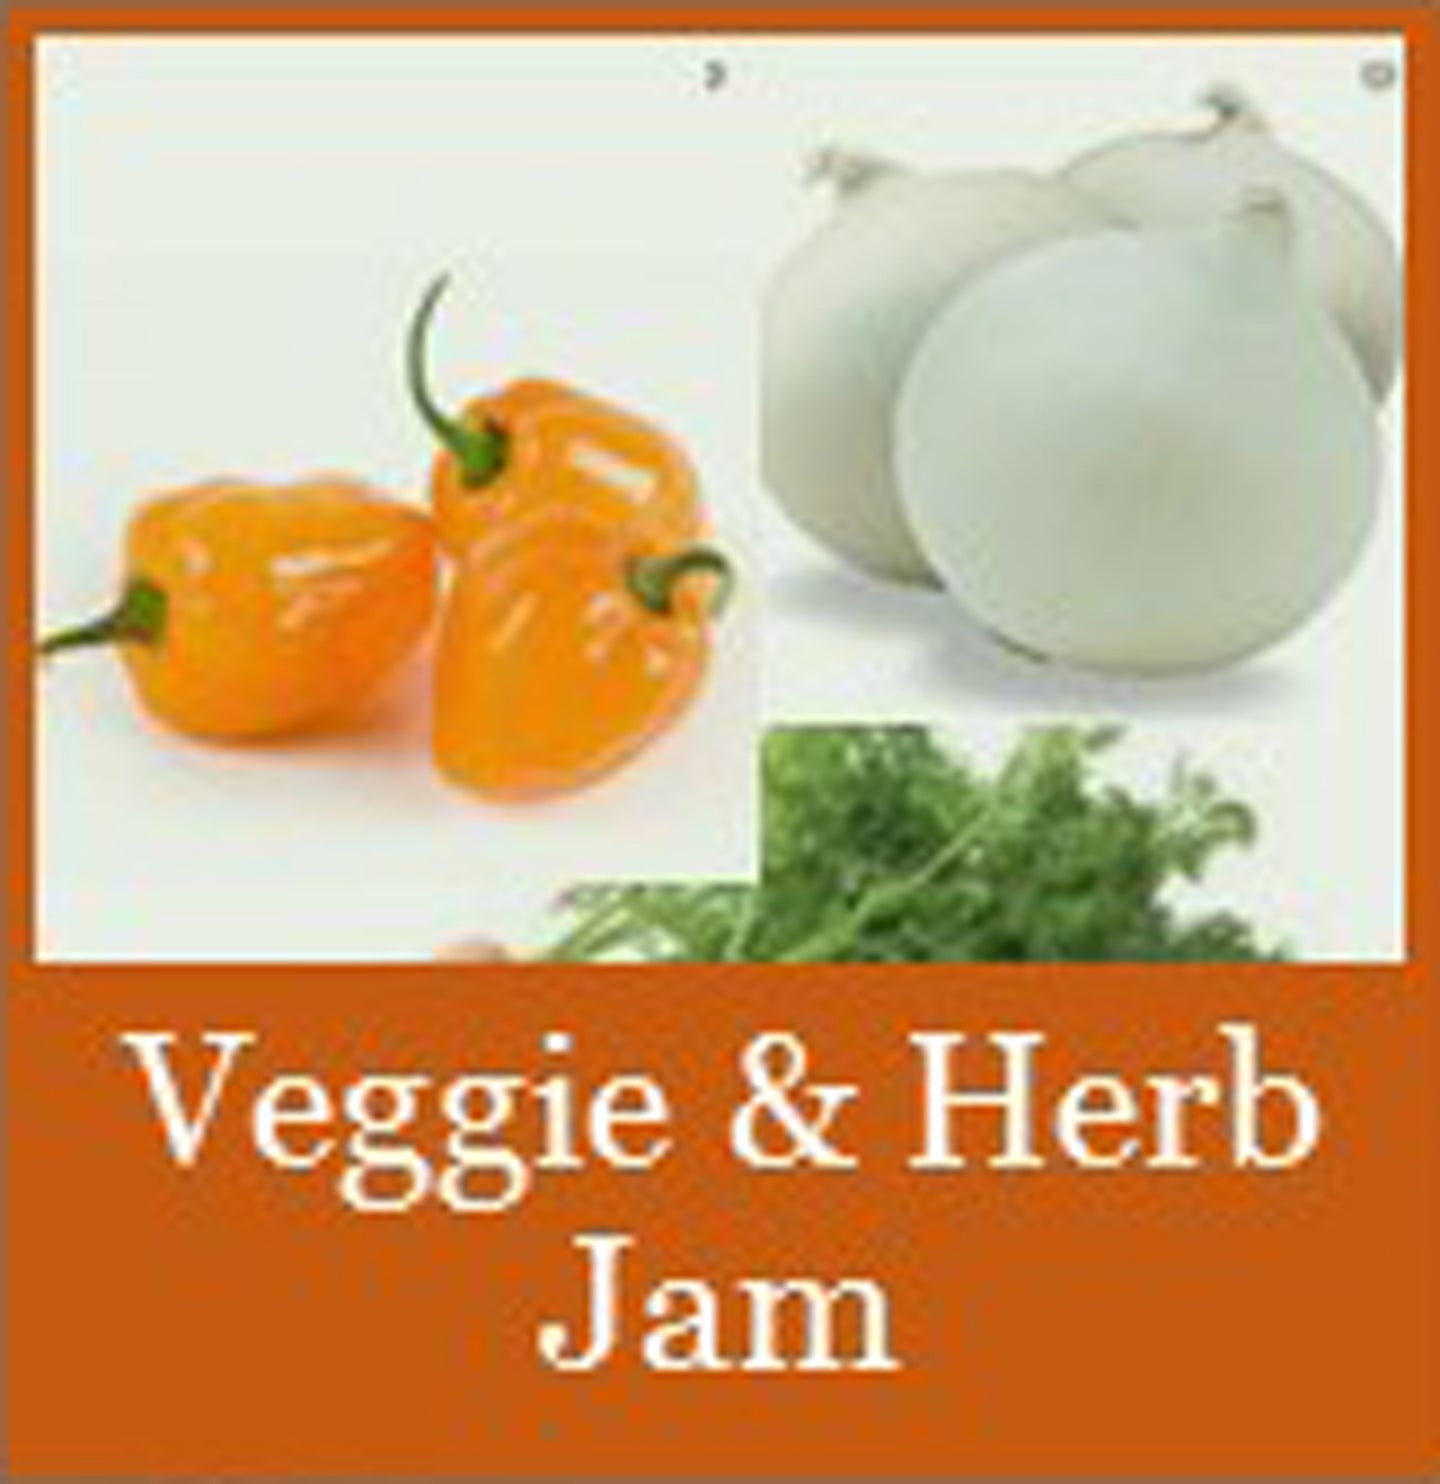 Veggie & Herb Jams - Ridgedale Orchard & Vineyard